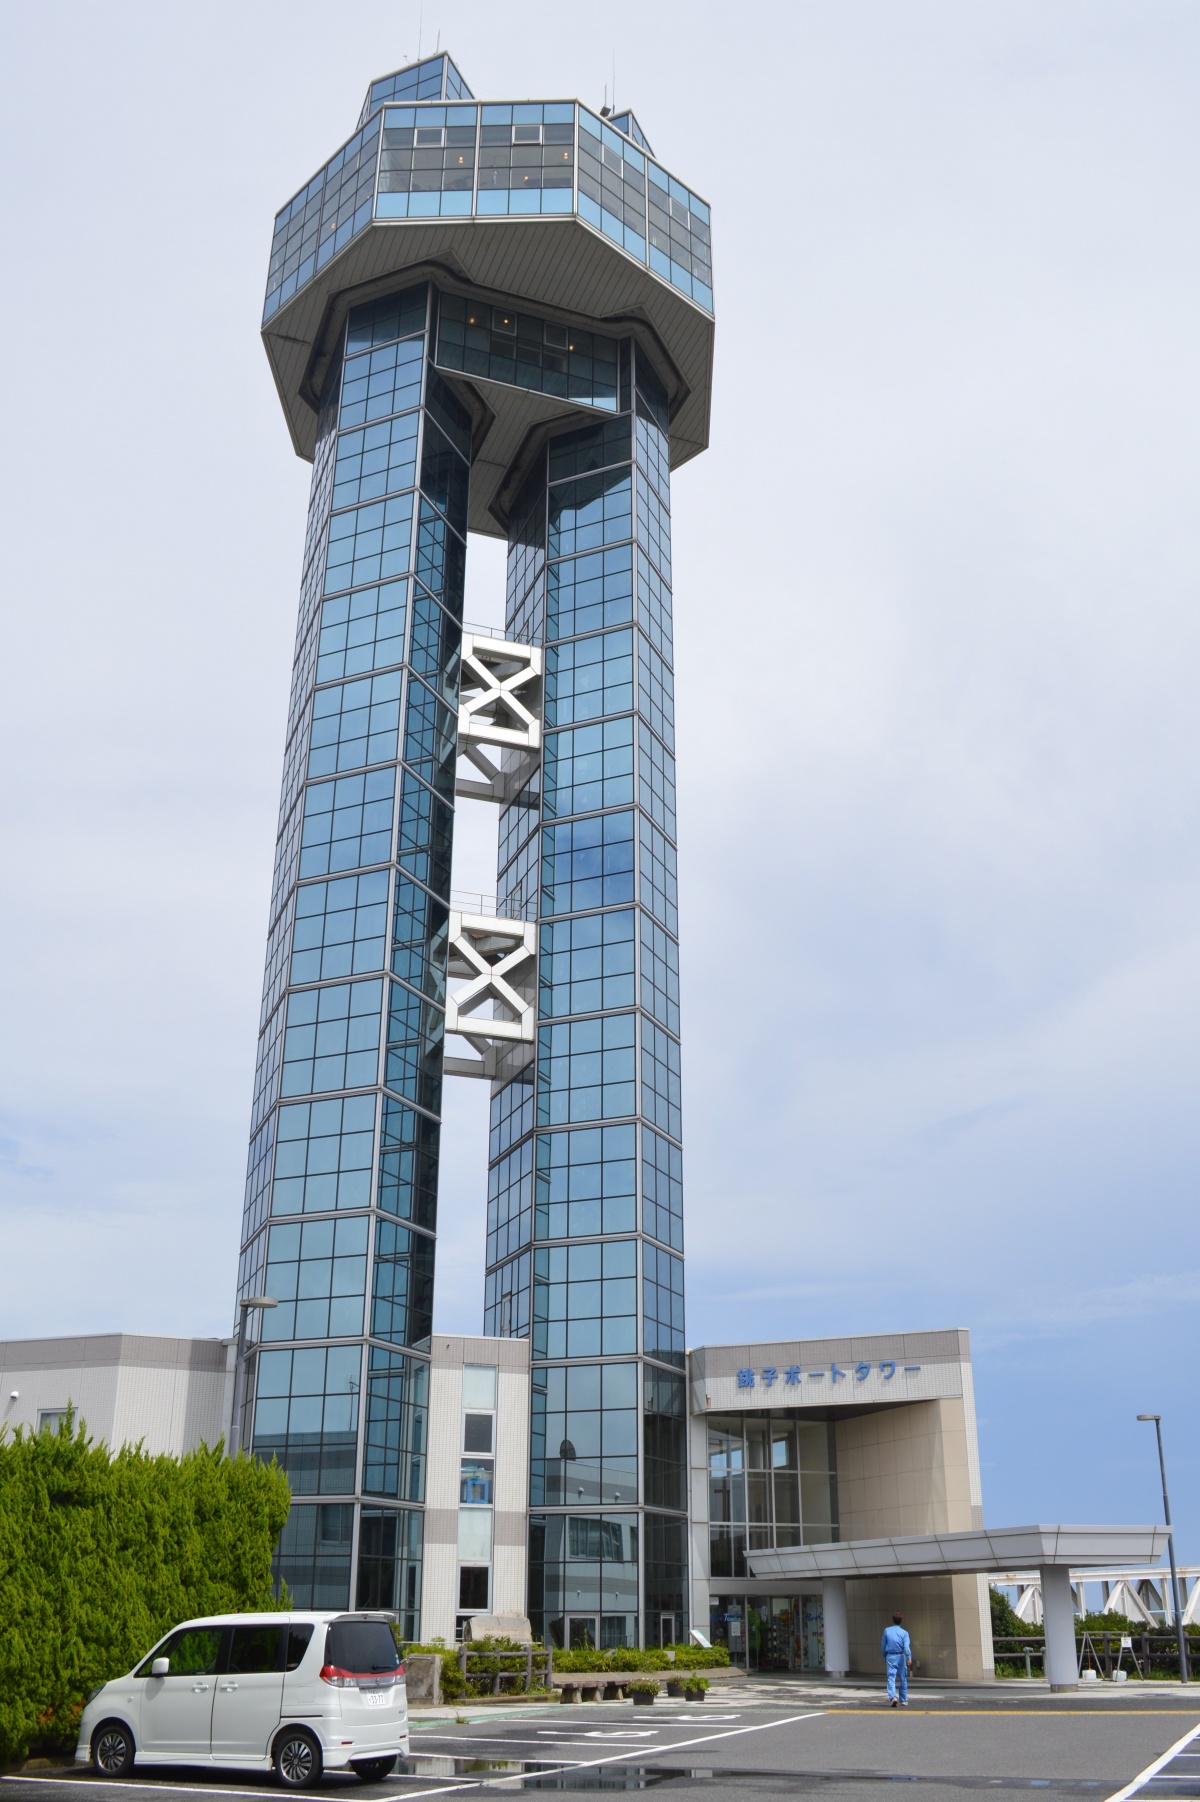 4. Choshi Port Tower